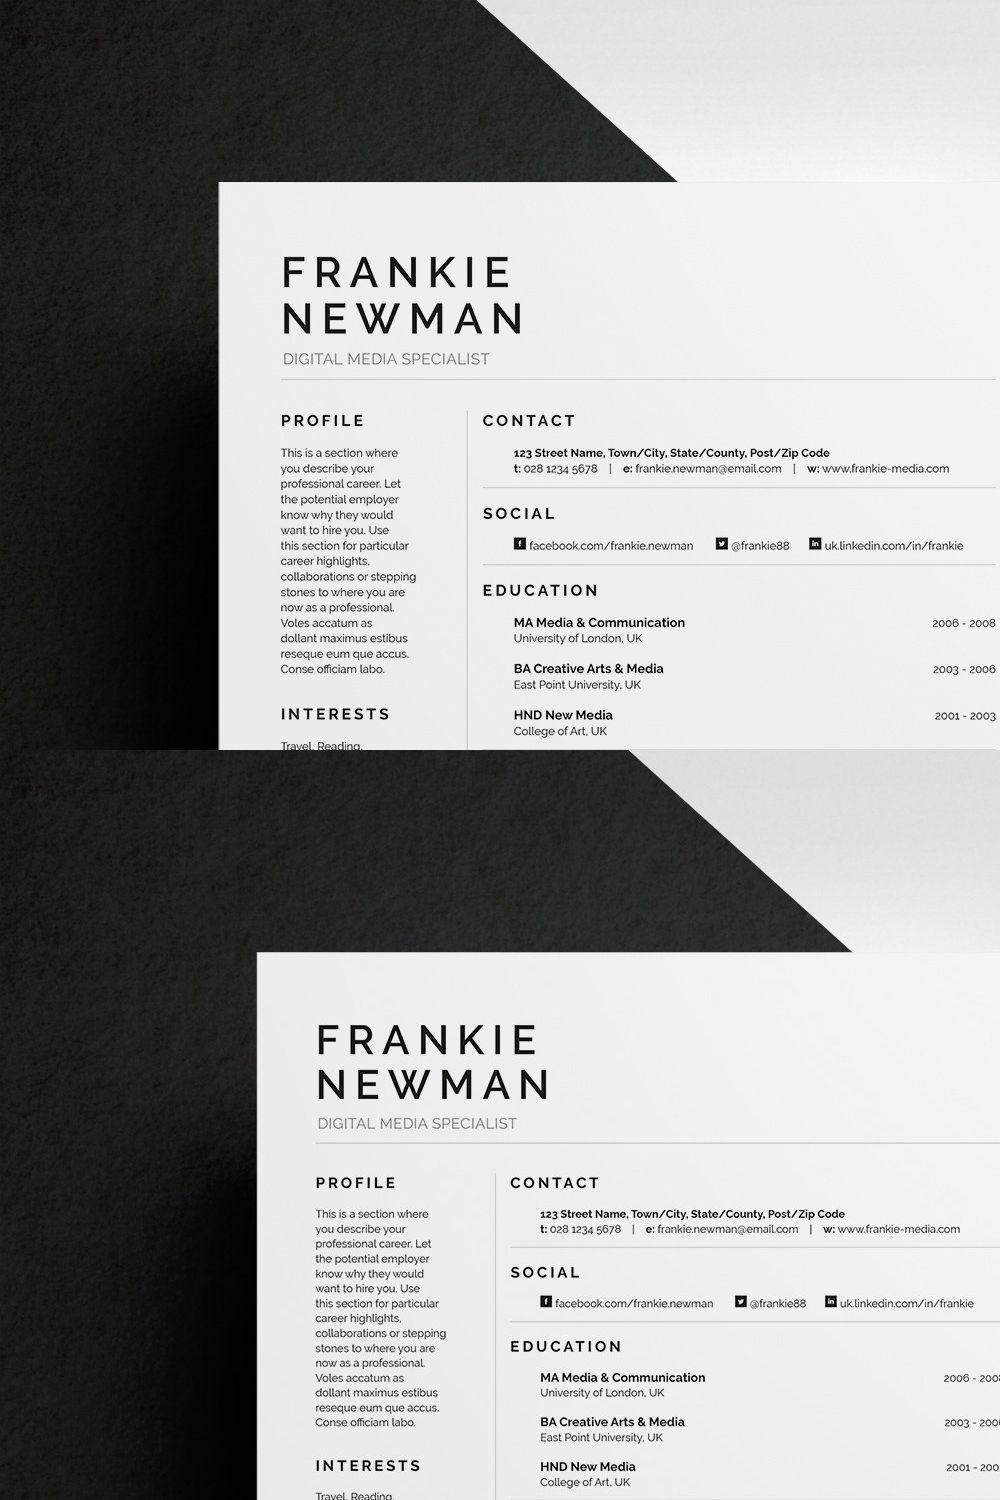 Resume/CV - Frankie pinterest preview image.